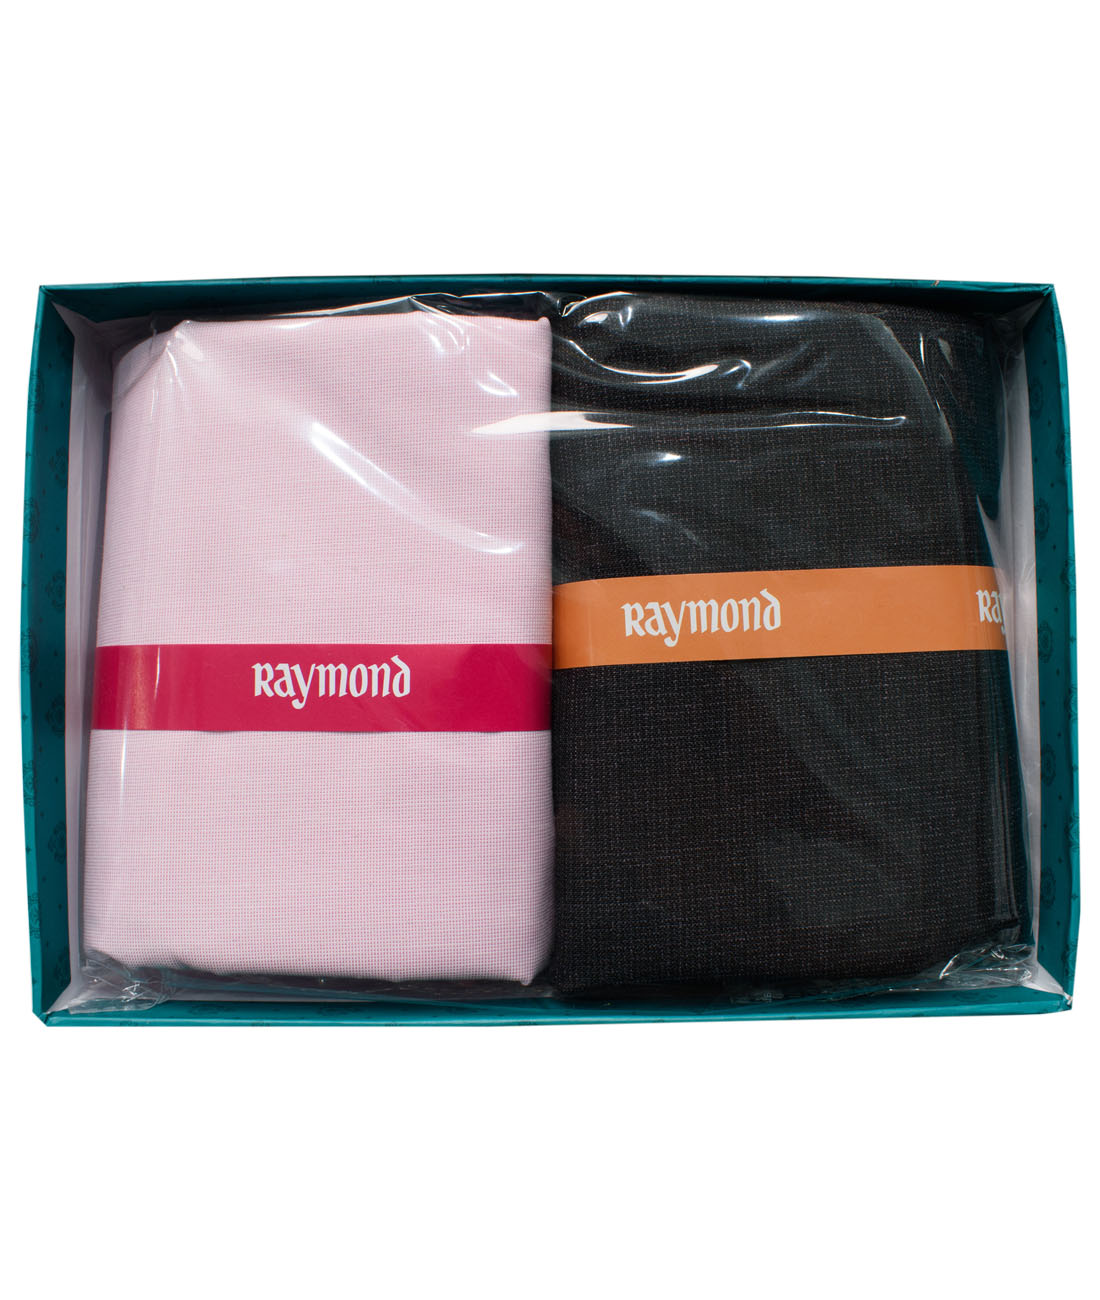 Raymond Shirt Pant Fabric Combo In Velvet Box, Red : Amazon.in: Fashion